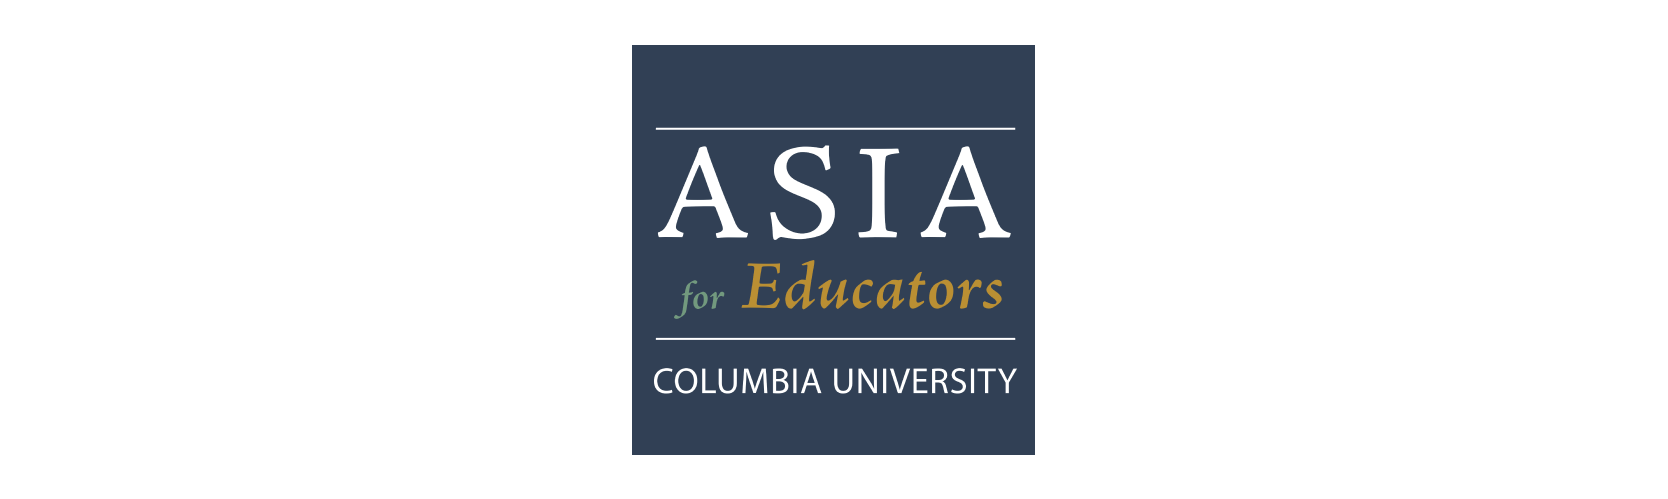 Asia for Educators